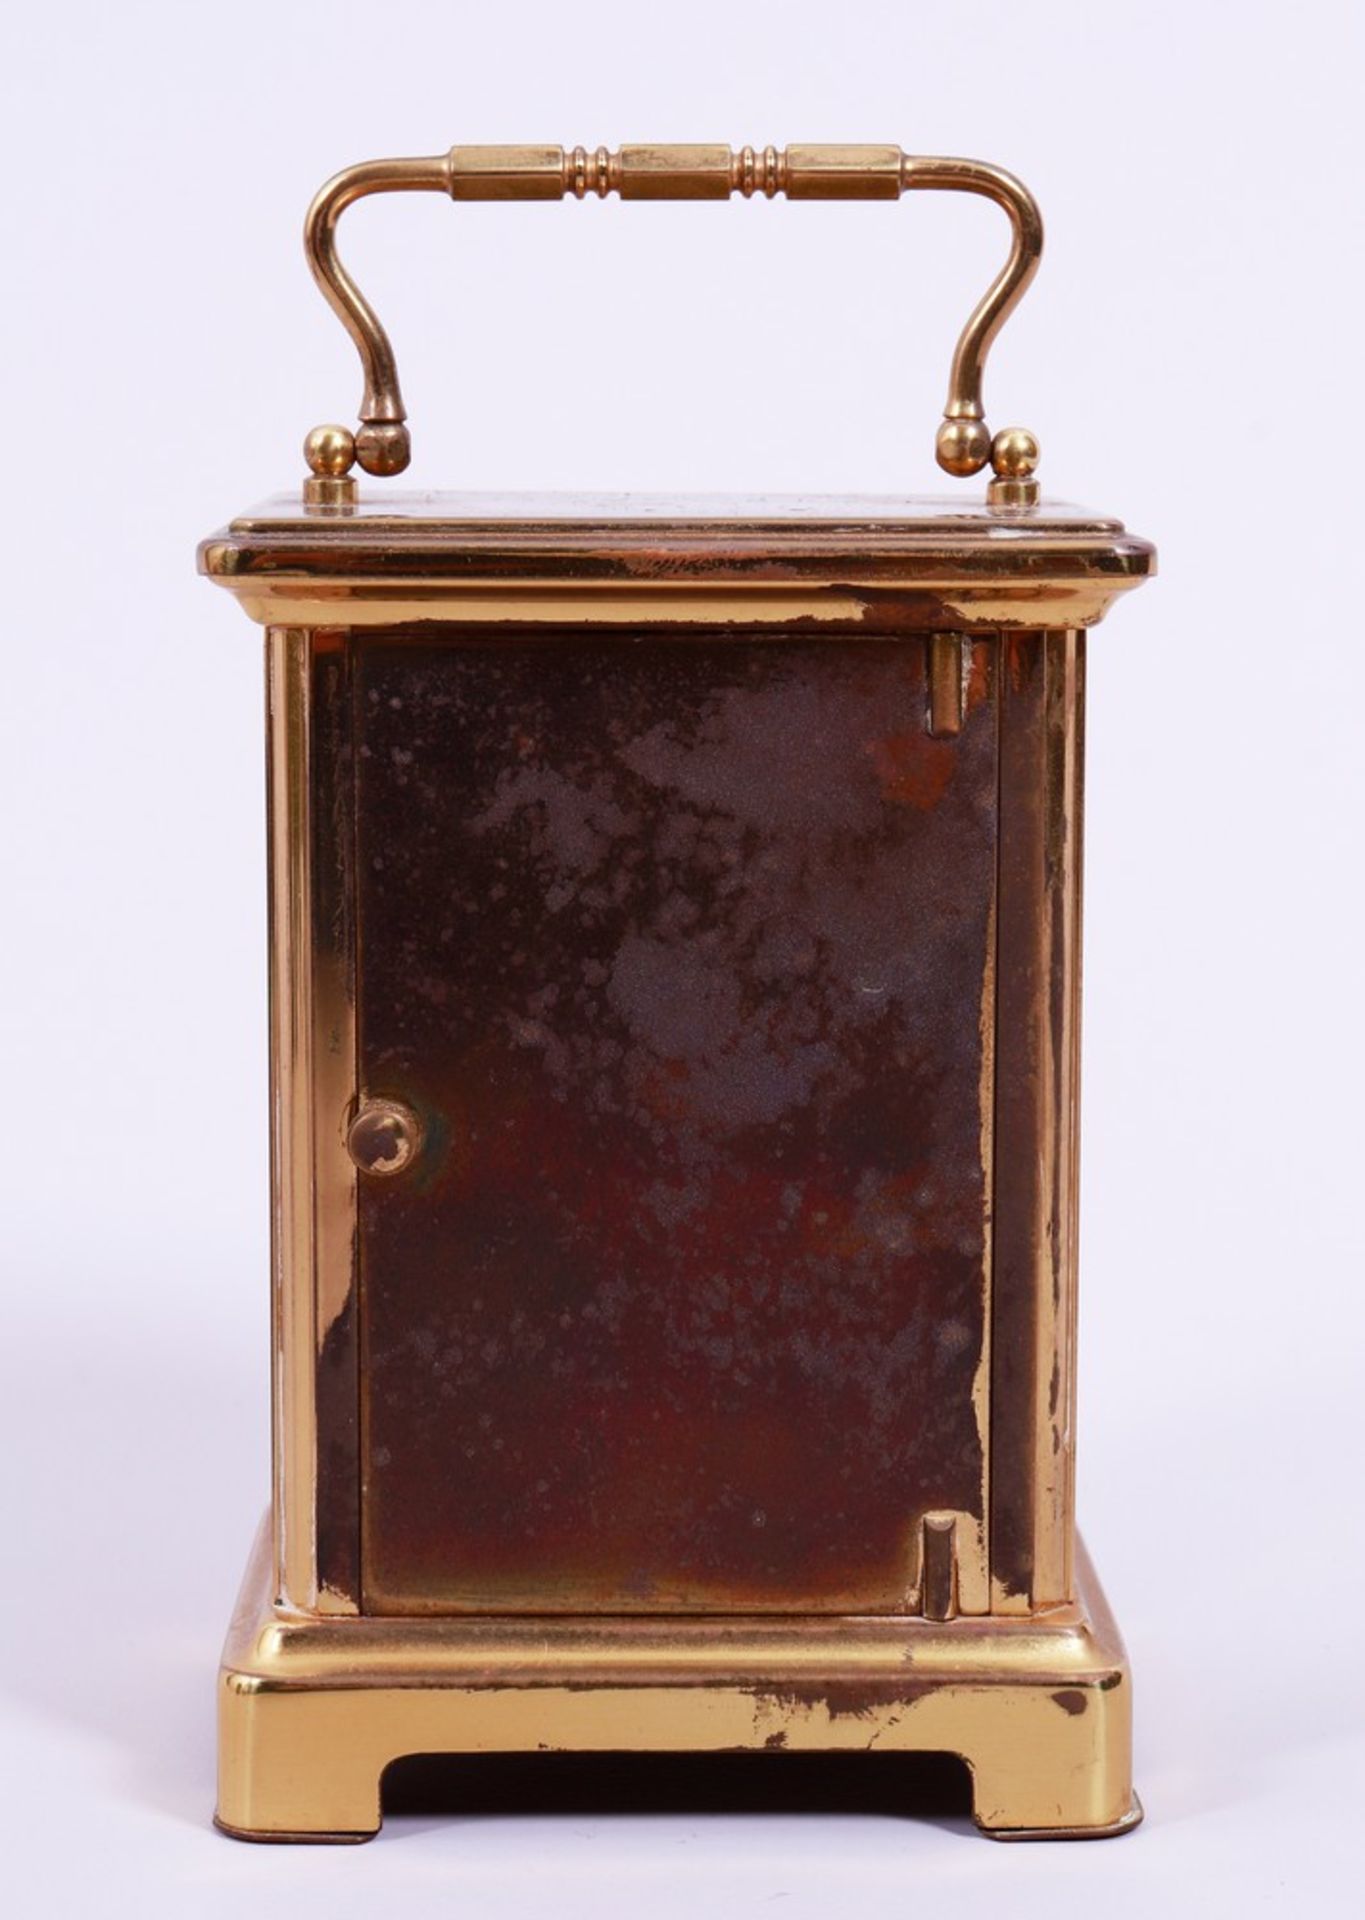 Small carriage clock, Duverdrey & Bloquel Bayard, France, c. 1900/20 - Image 5 of 8